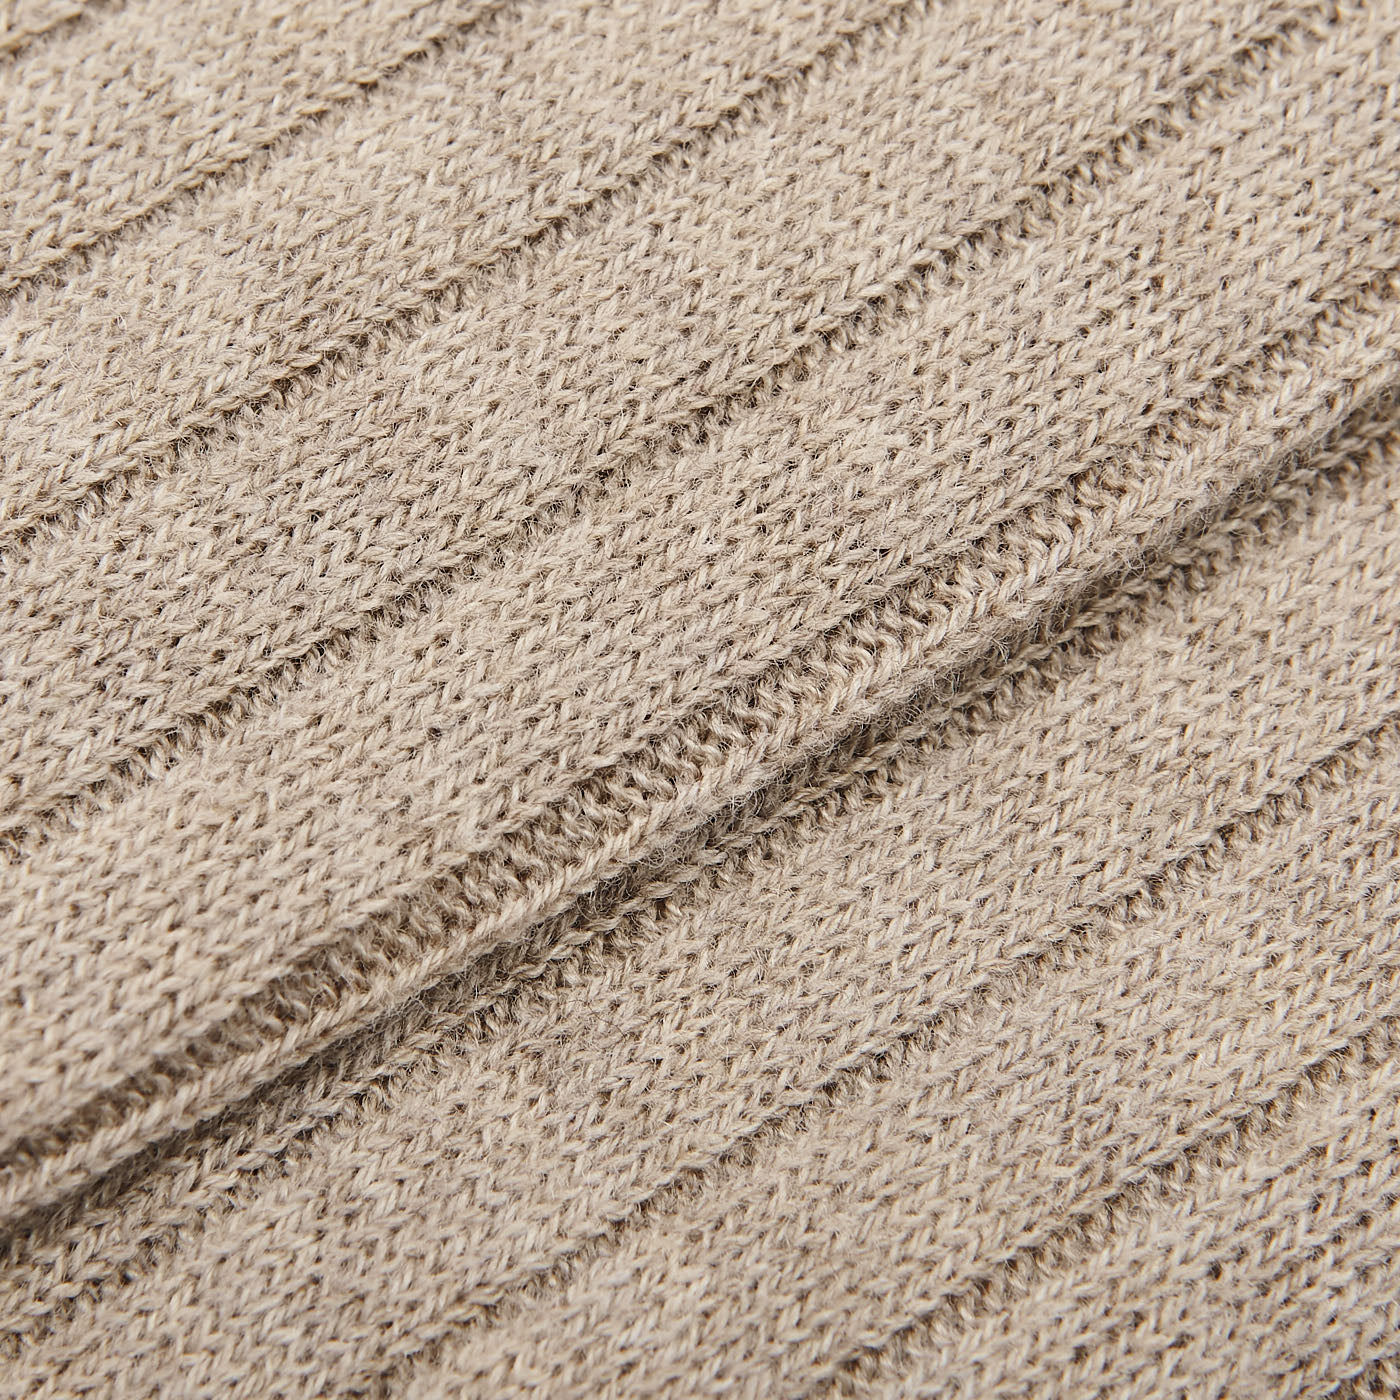 Bresciani Beige Ribbed Wool Cashmere Socks Fabric